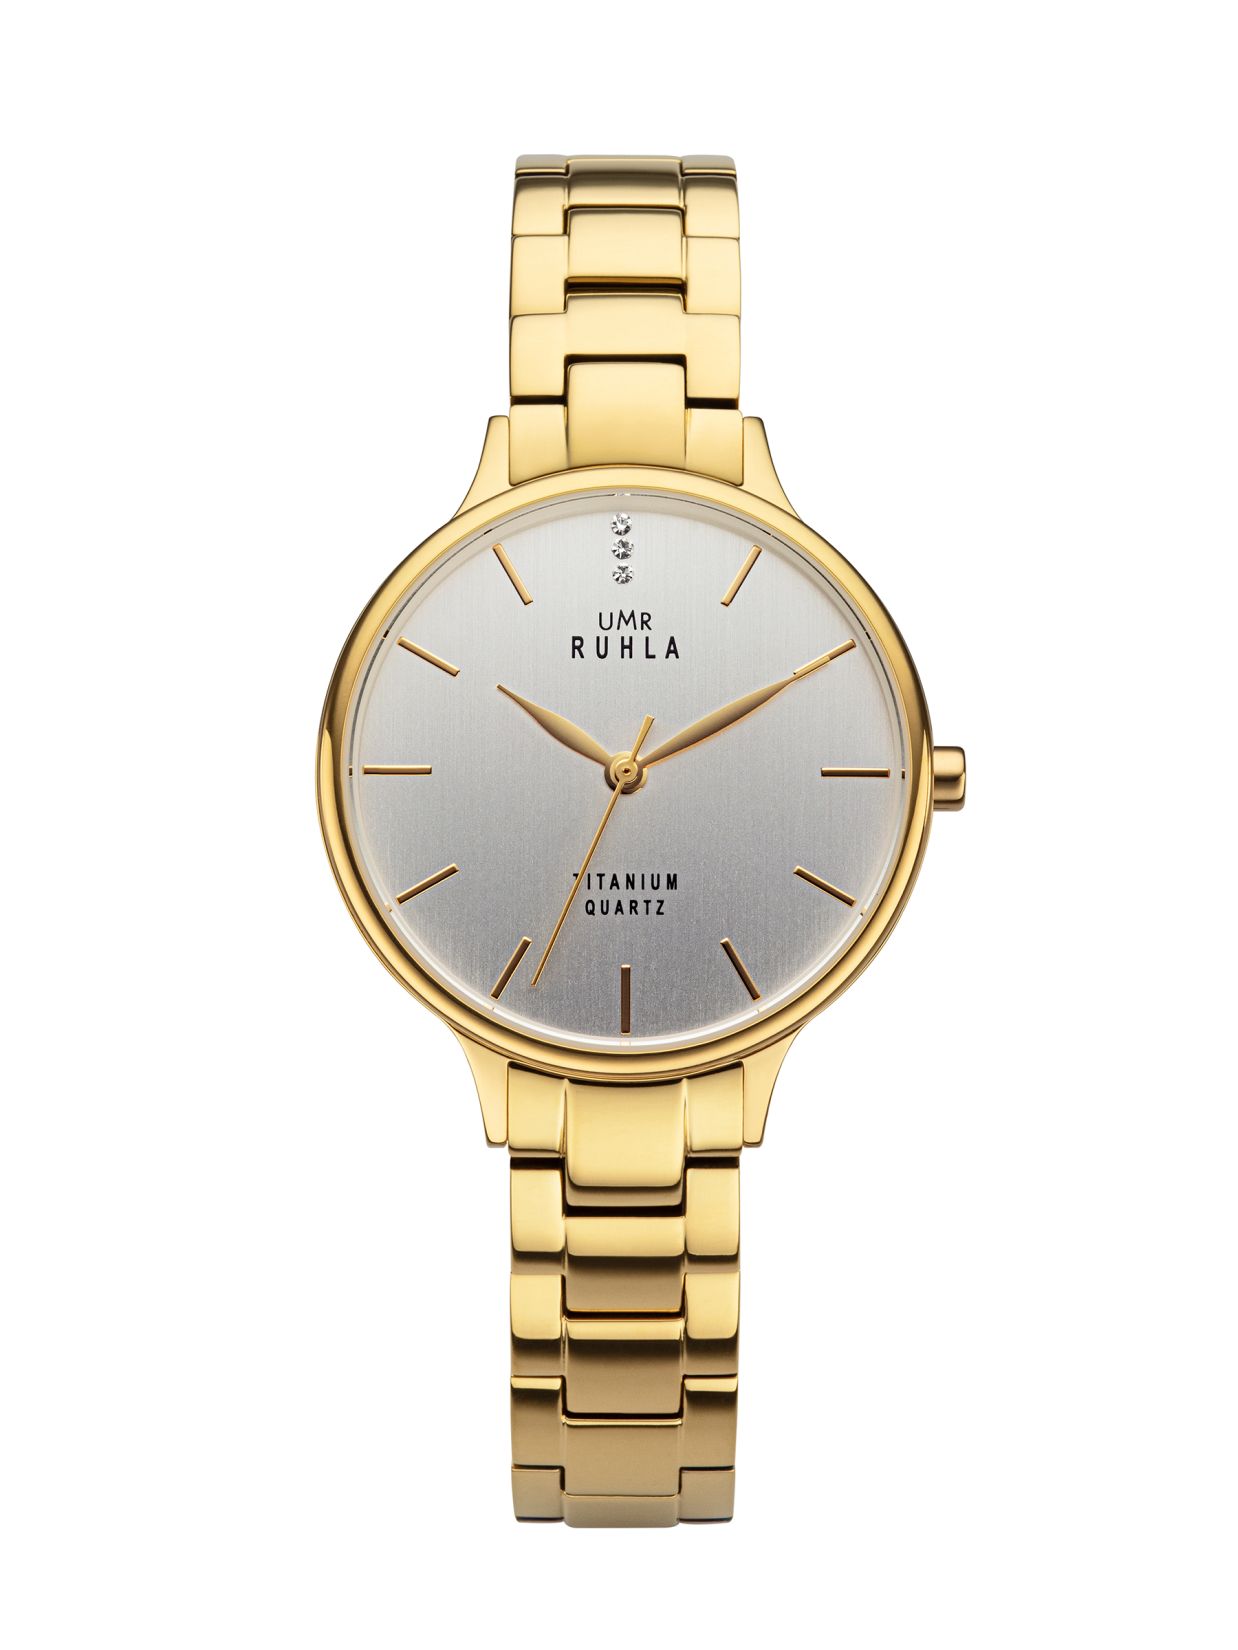 Uhren Manufaktur Ruhla - Armbanduhr Style Titan goldplattiert